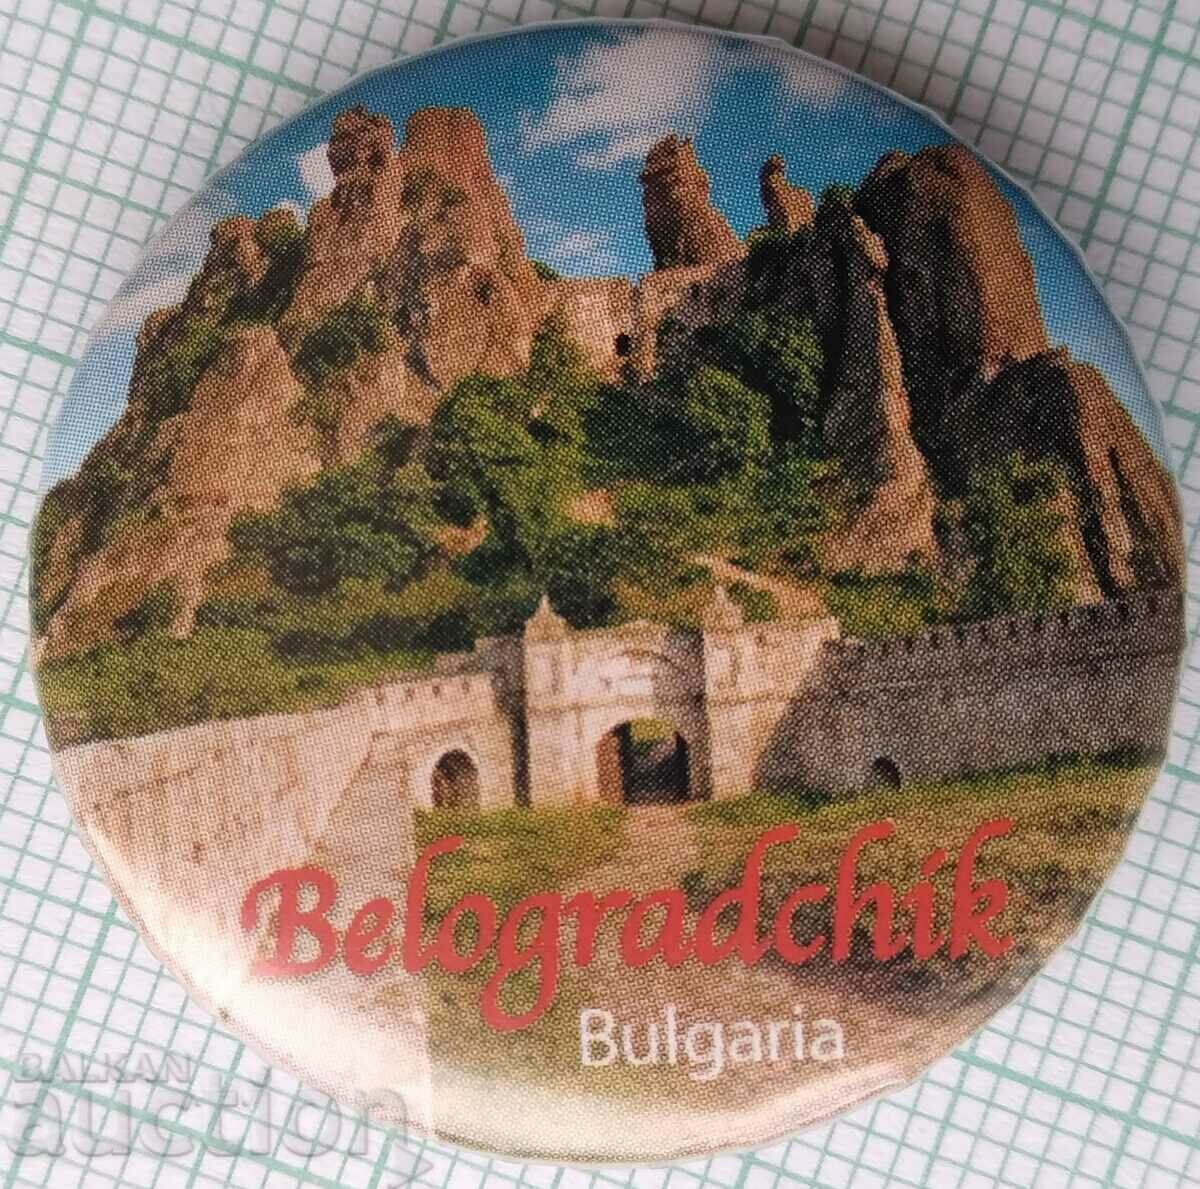 14558 Badge - Belogrdachik